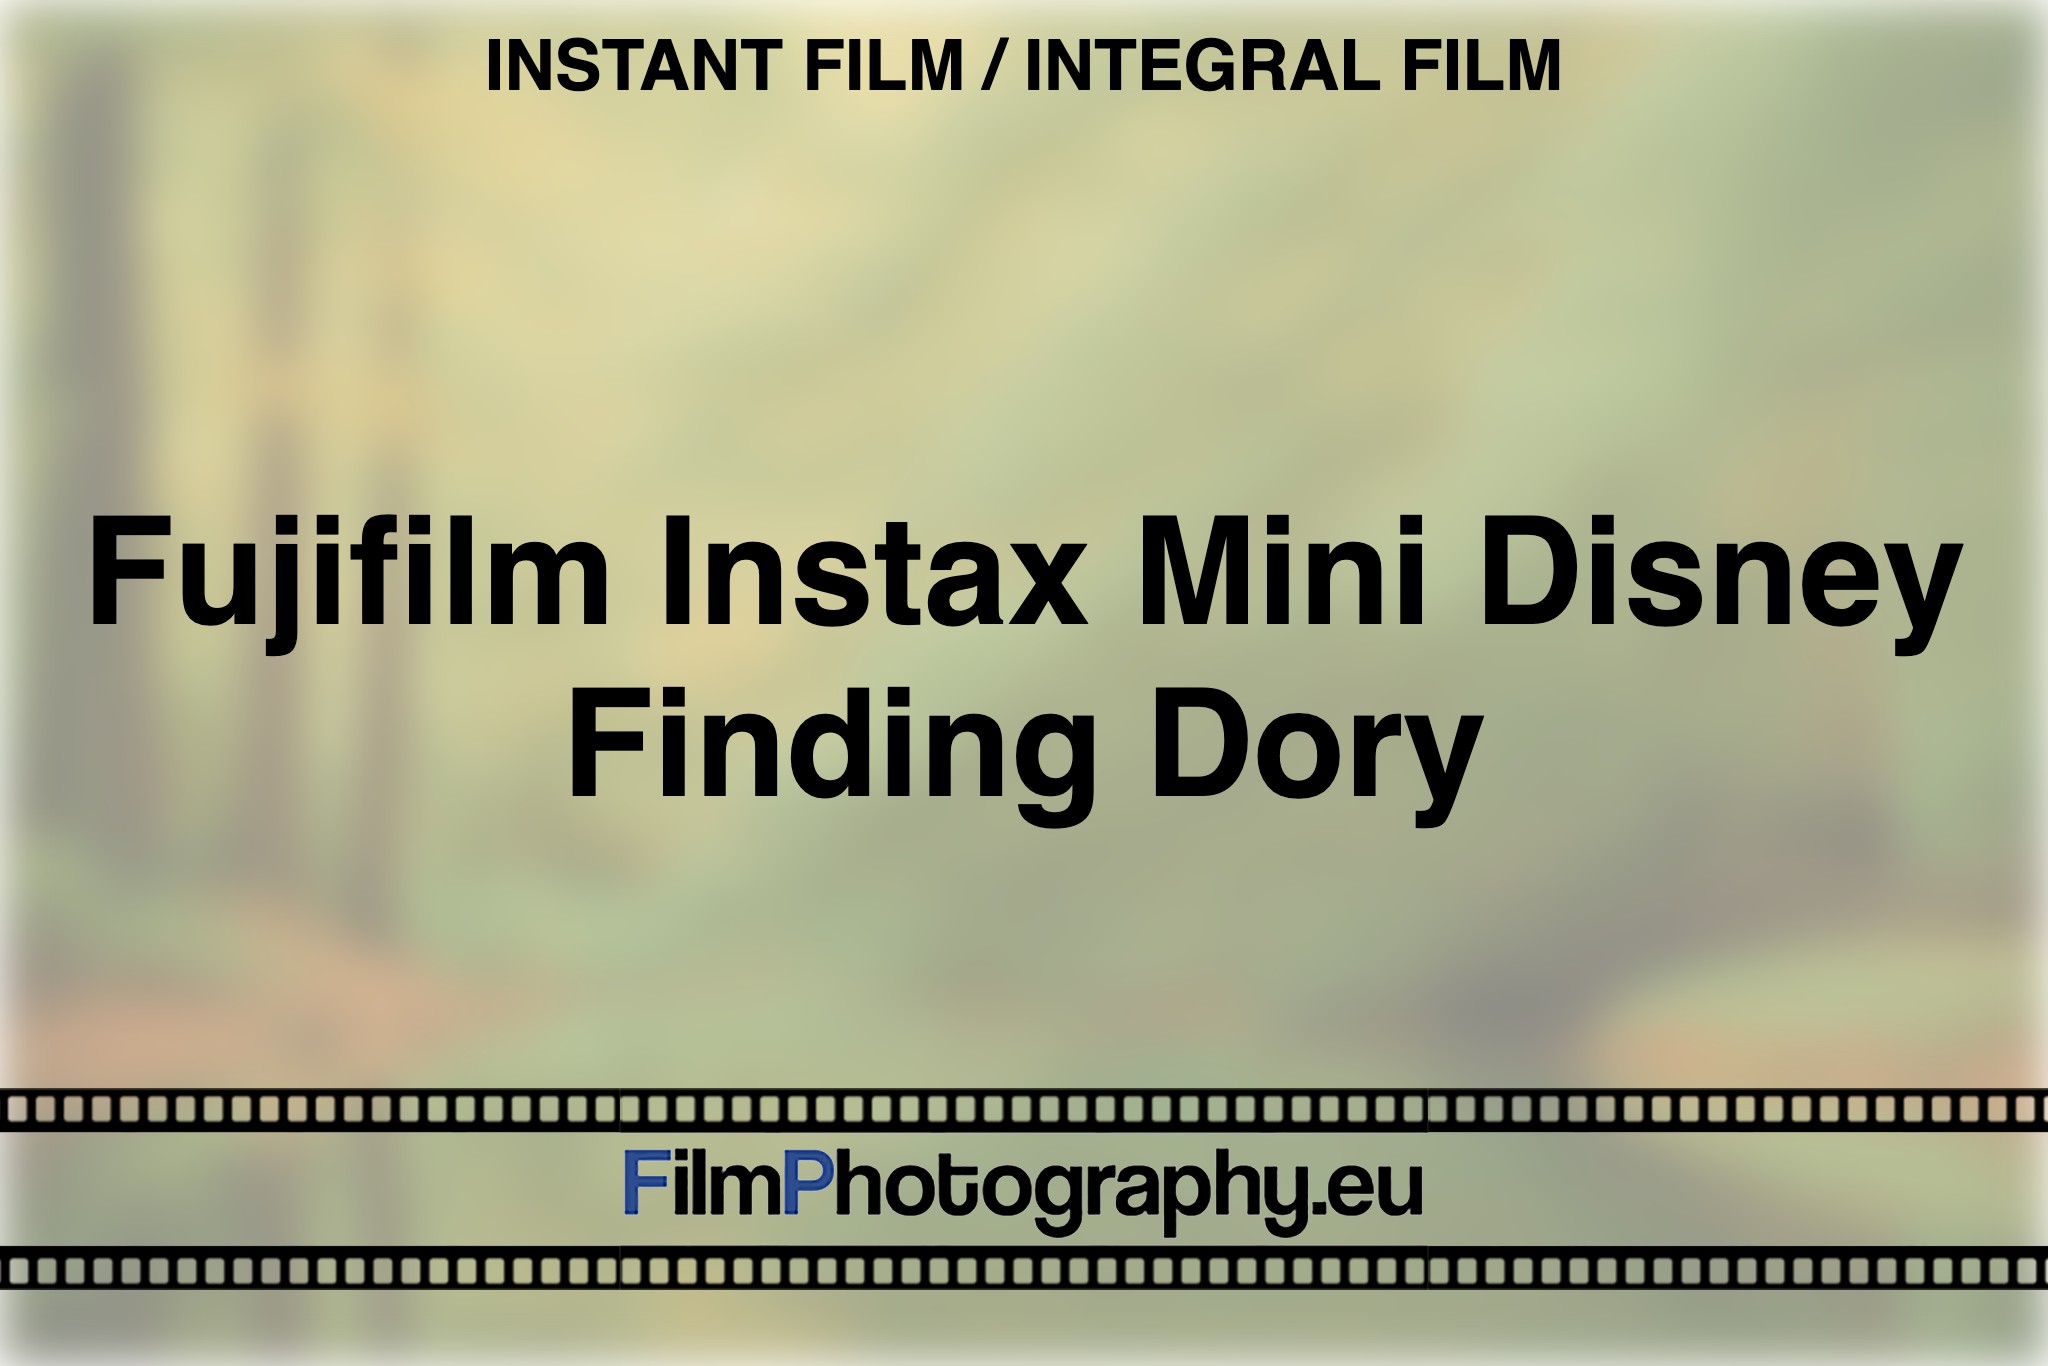 fujifilm-instax-mini-disney-finding-dory-instant-film-integral-film-bnv